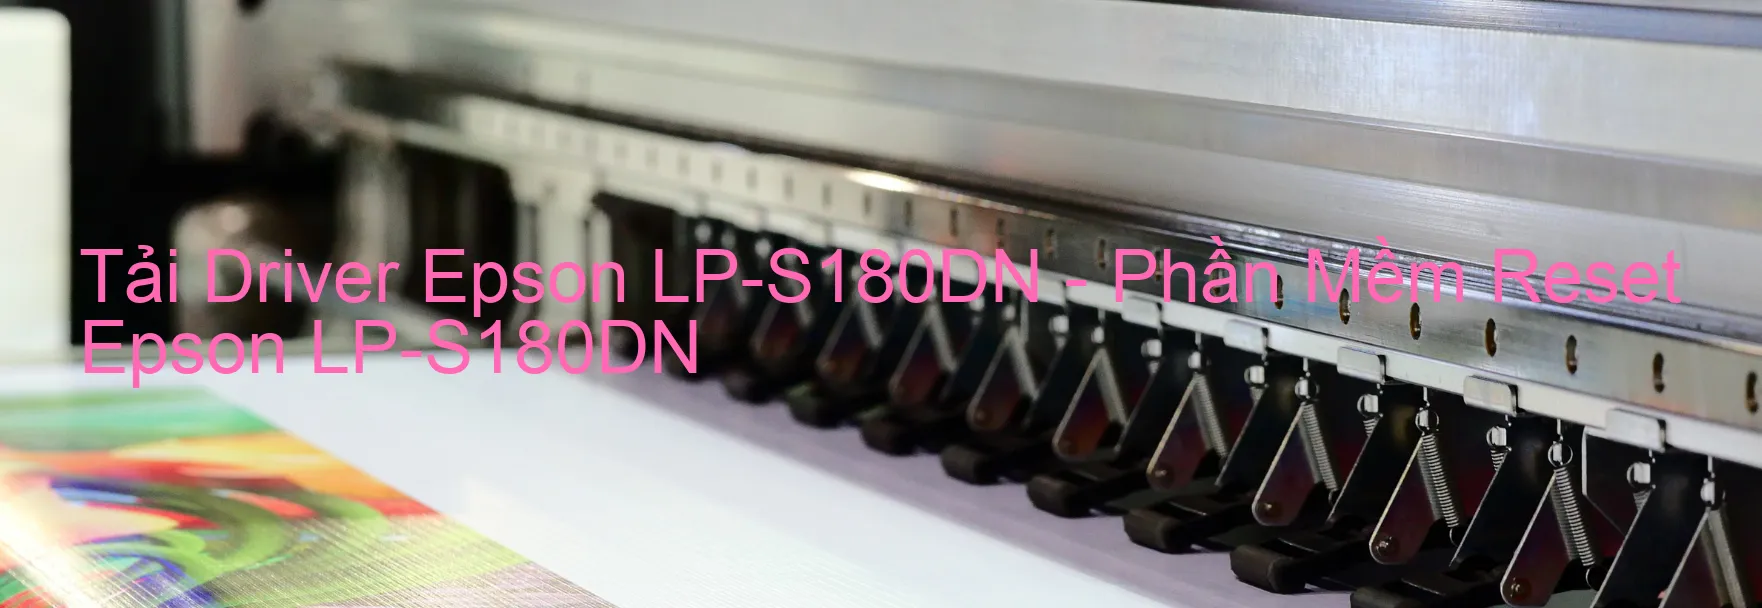 Driver Epson LP-S180DN, Phần Mềm Reset Epson LP-S180DN